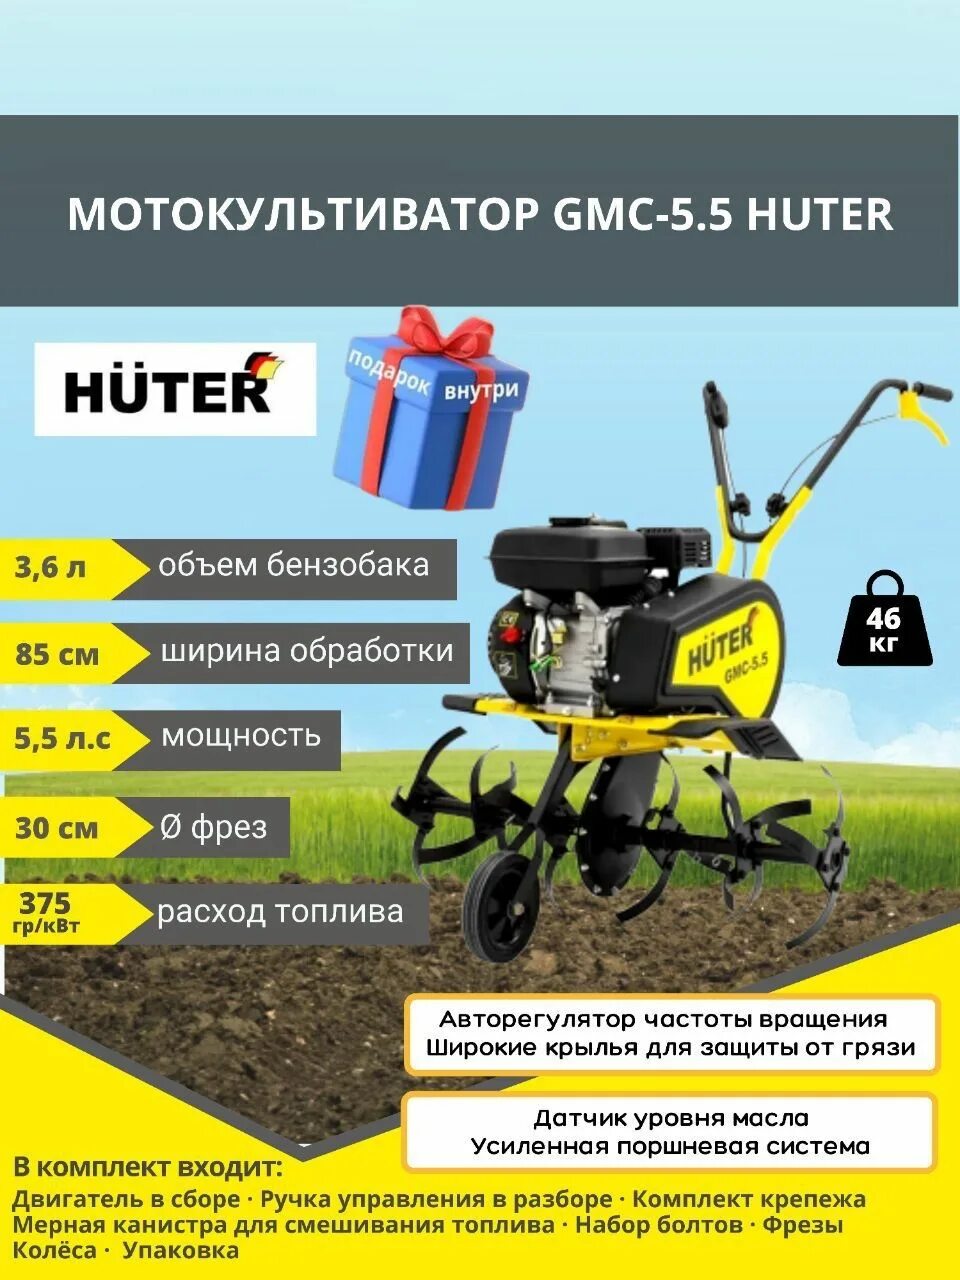 5 huter отзывы. Мотокультиватор GMC-5.5 Huter. Huter GMC-5.5 характеристики. Мототяпка Huter GMC-1.8. Мотокультиватор Huter GMC-6.5.